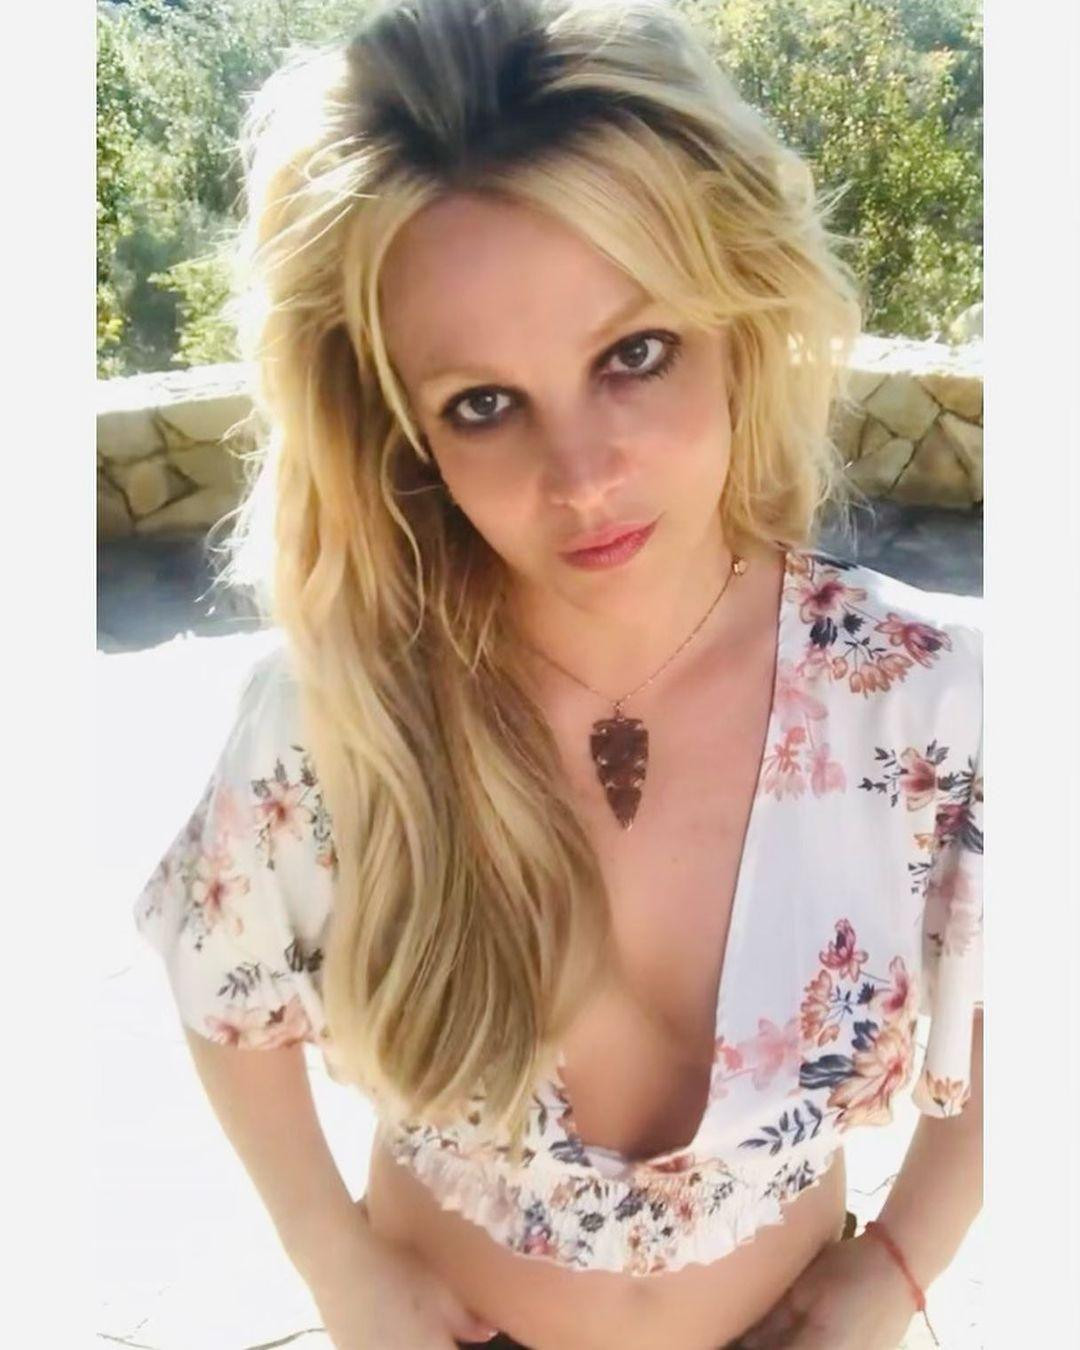 La cantante Britney Spears / INSTAGRAM